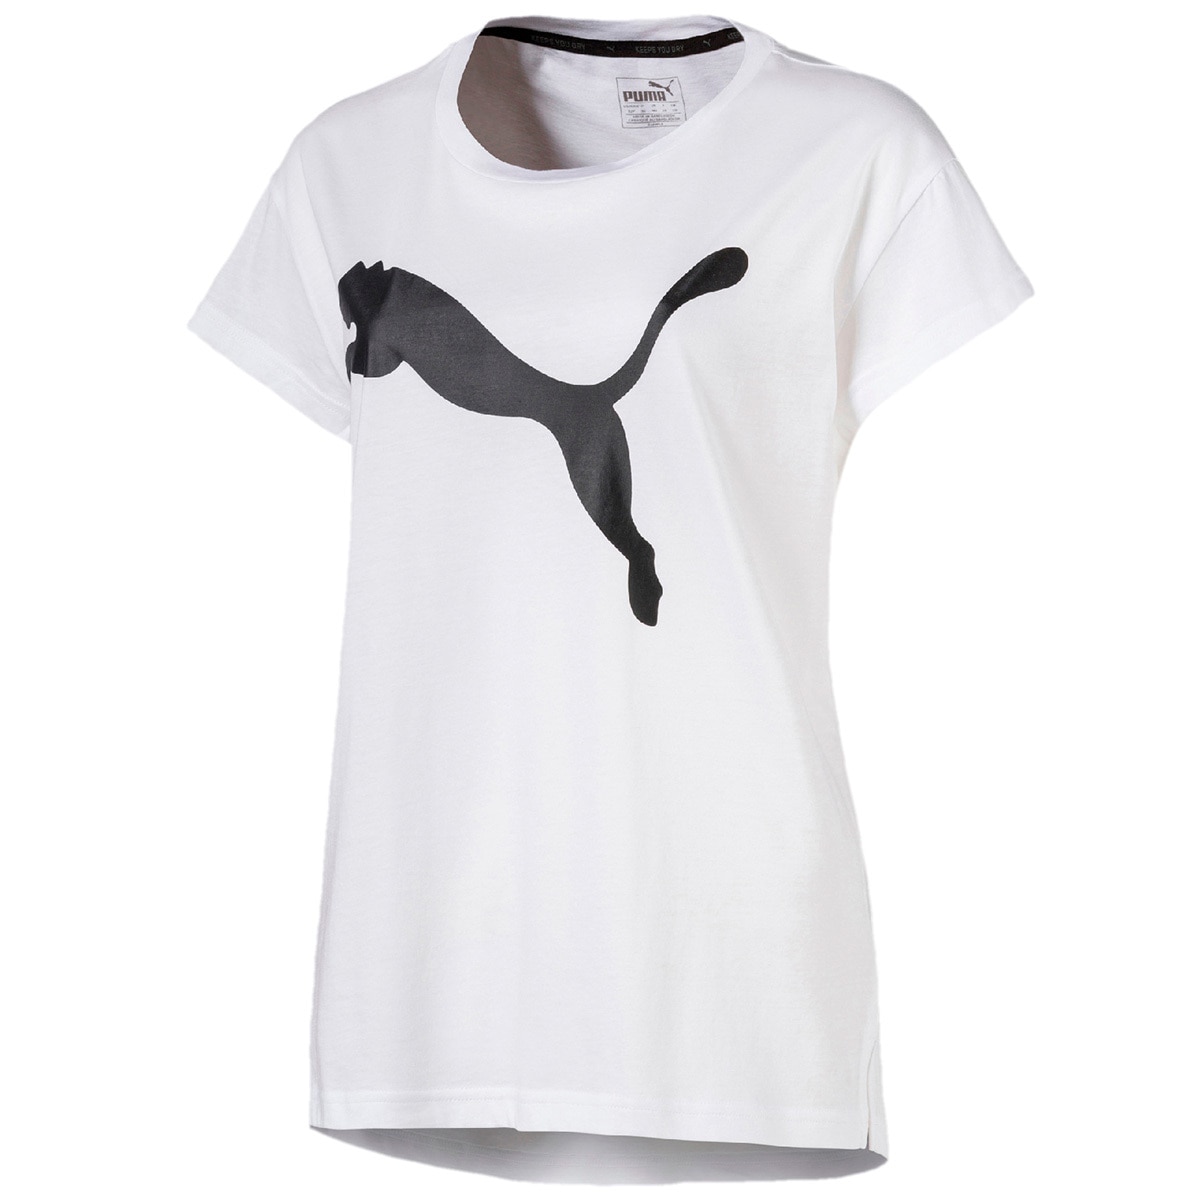 Puma Women's Cat Logo Tee - Black/White